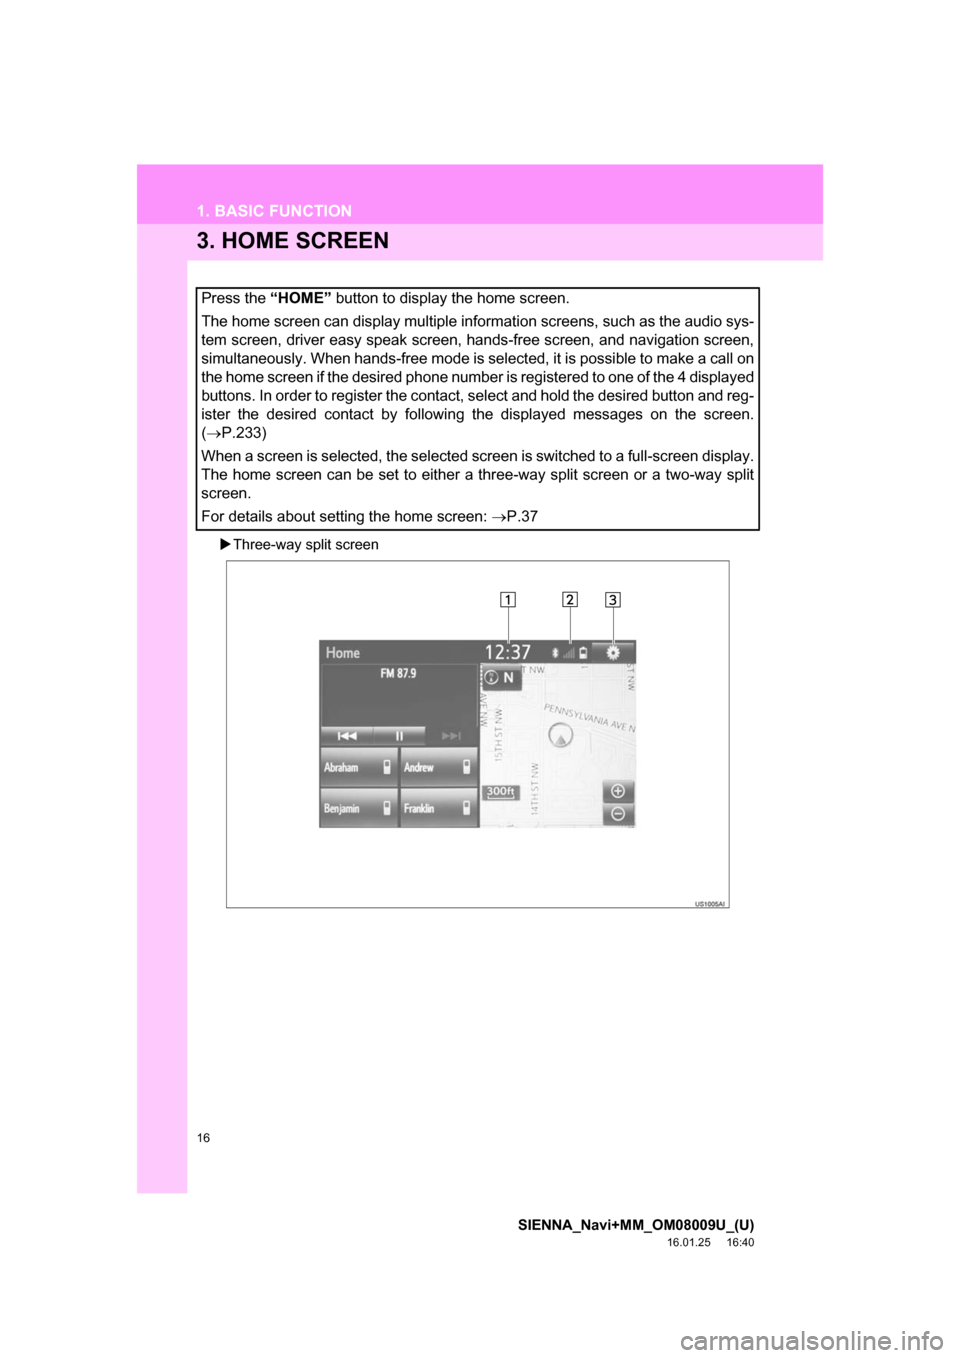 TOYOTA SIENNA 2017 XL30 / 3.G Navigation Manual 16
1. BASIC FUNCTION
SIENNA_Navi+MM_OM08009U_(U)
16.01.25     16:40
3. HOME SCREEN
Three-way split screen
Press the “HOME”  button to display the home screen.
The home screen can display multip